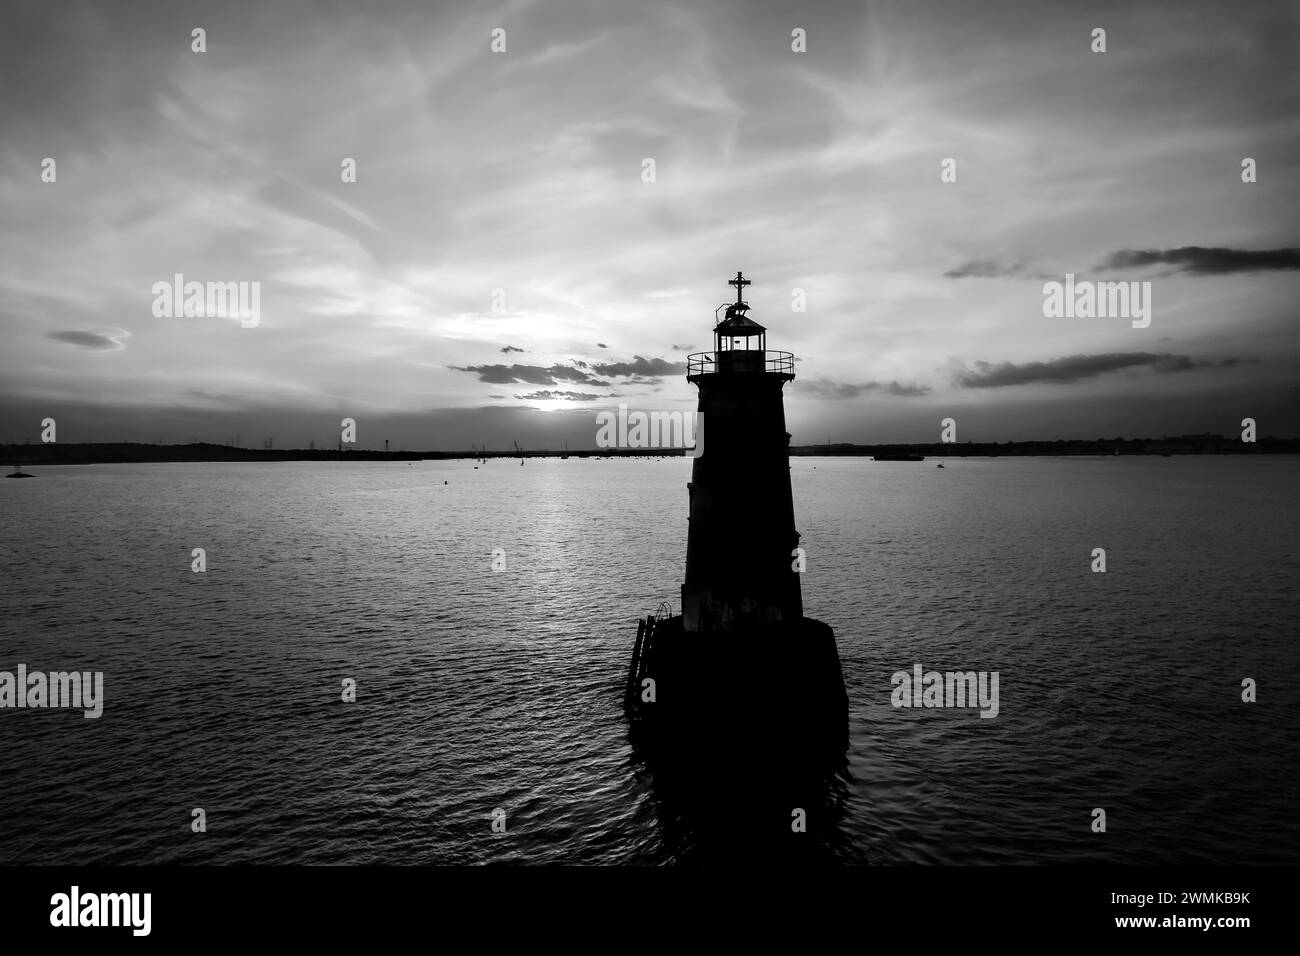 Great Beds Lighthouse at sunset, Raritan Bay, Perth Amboy, New Jersey, USA Stock Photo